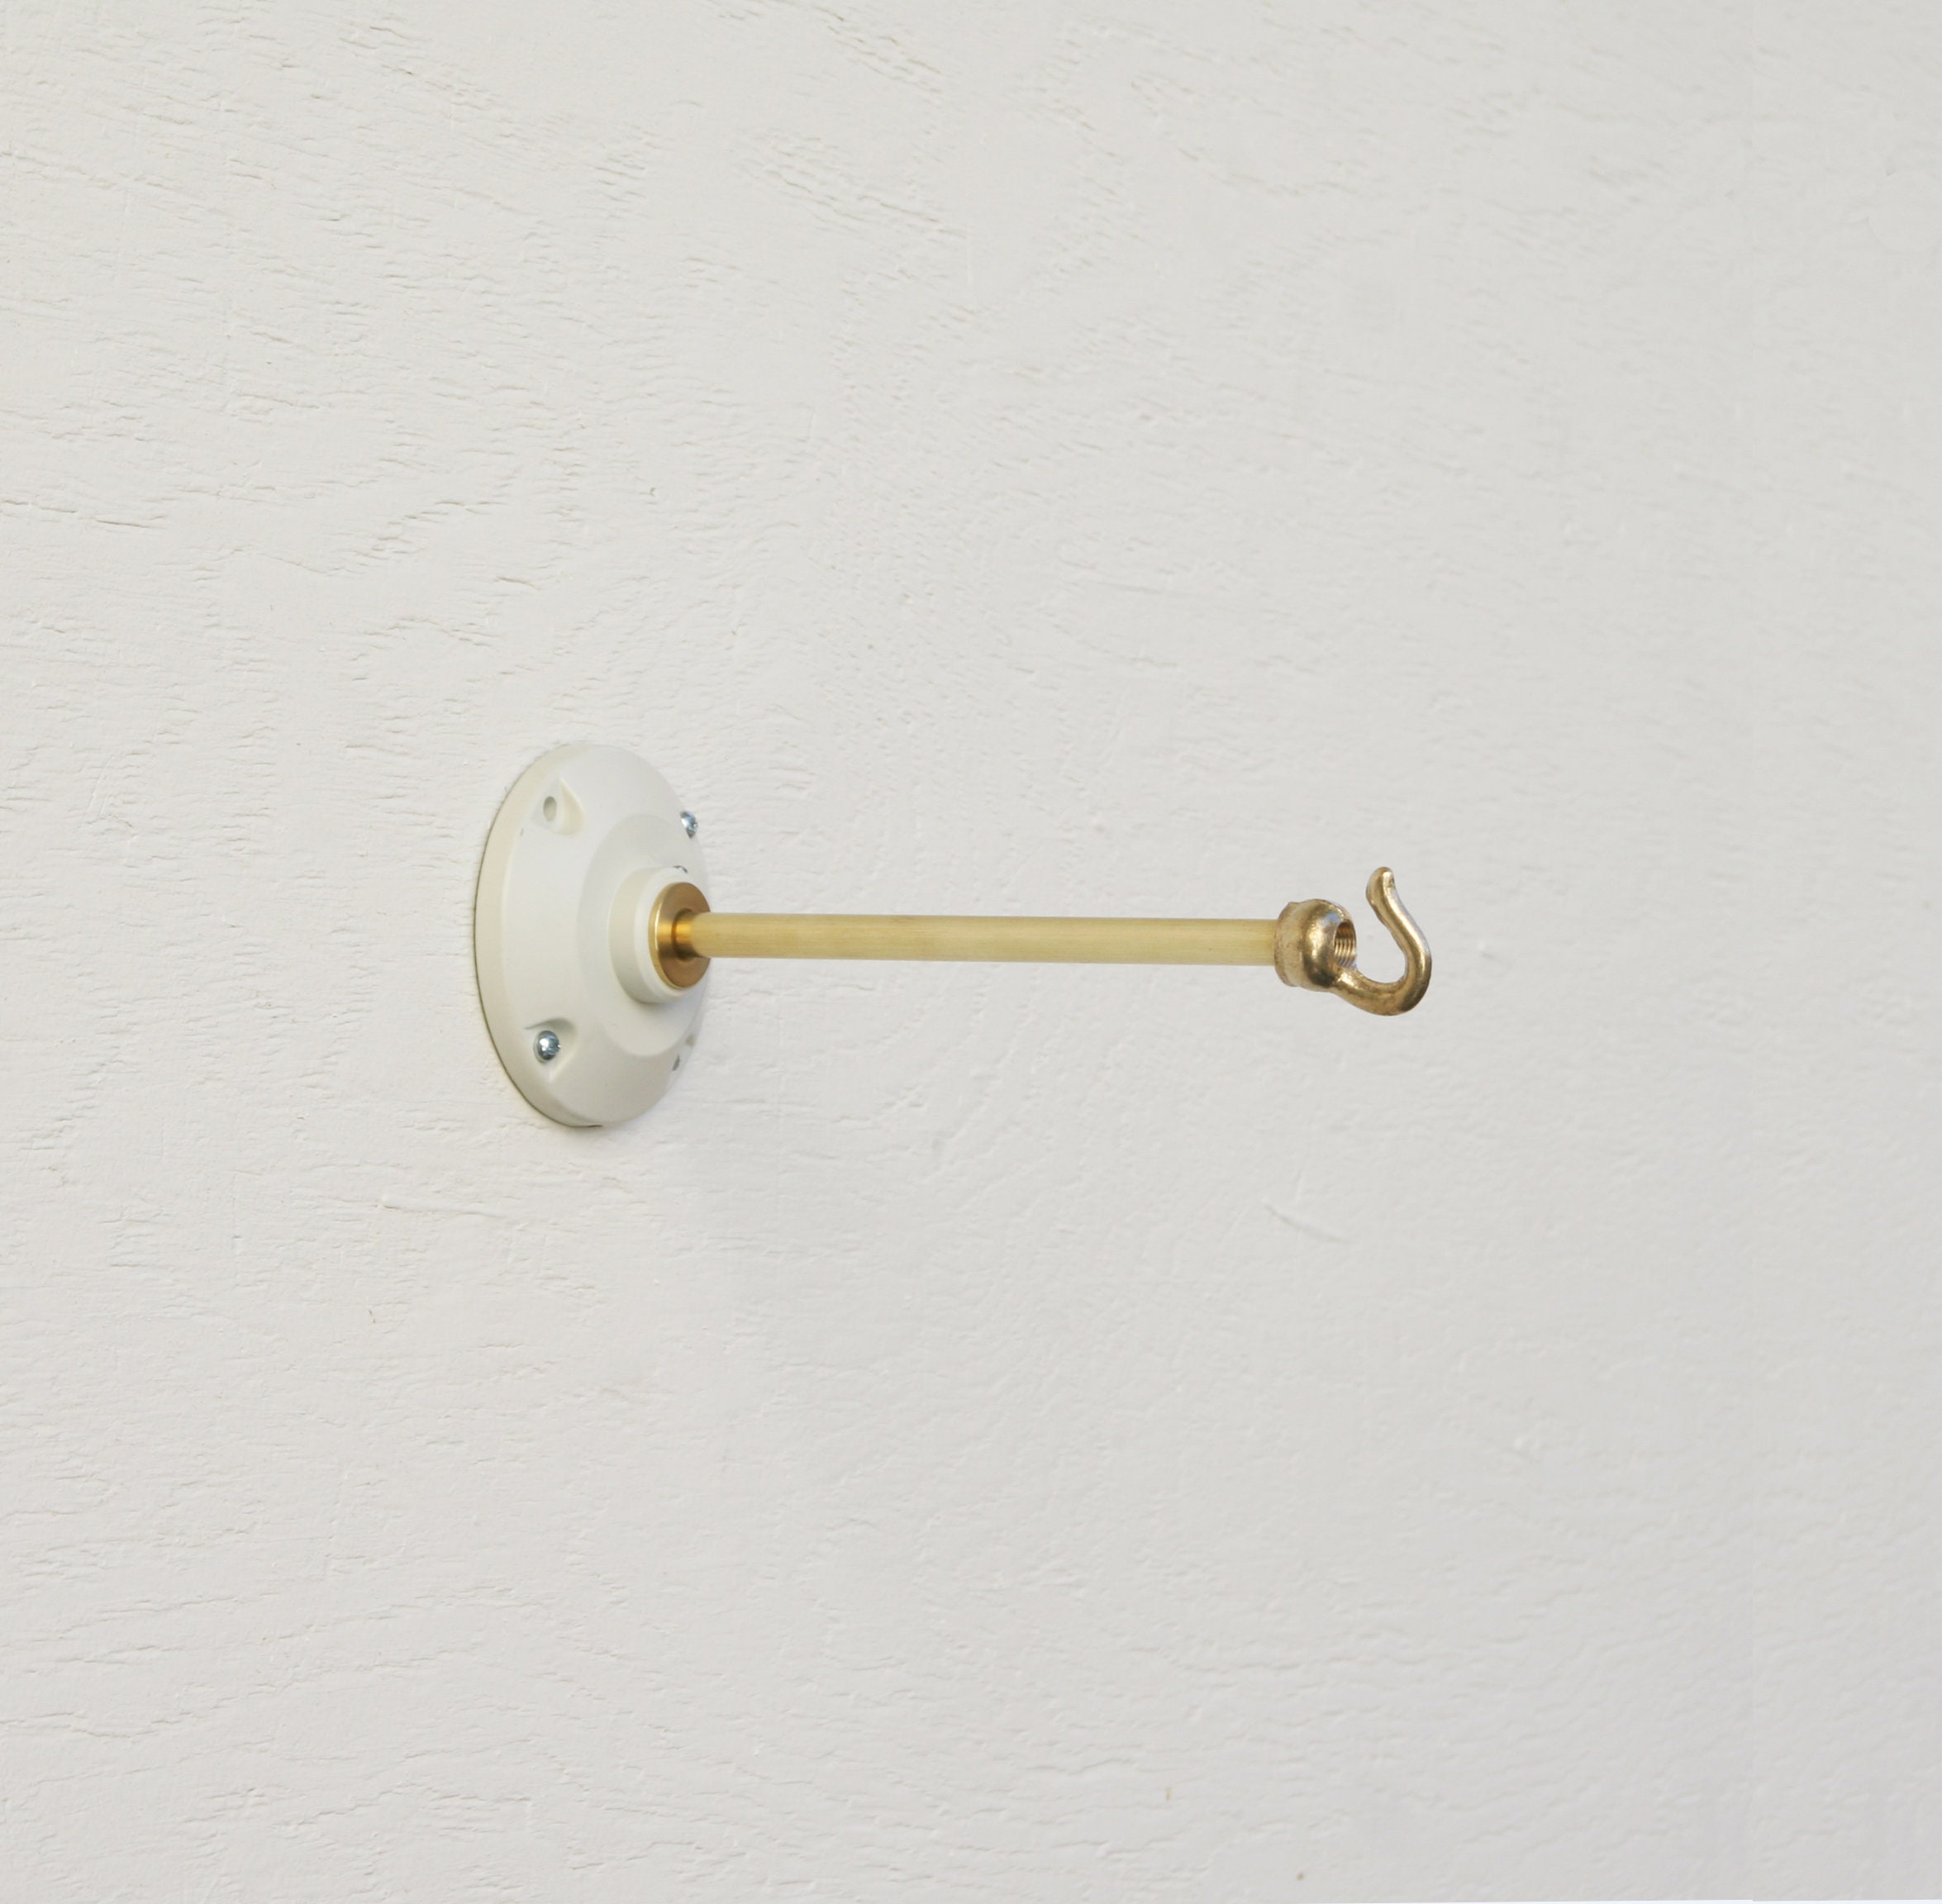 Brass and Aluminum Alloy Planter Hanger-brass Wall | Etsy